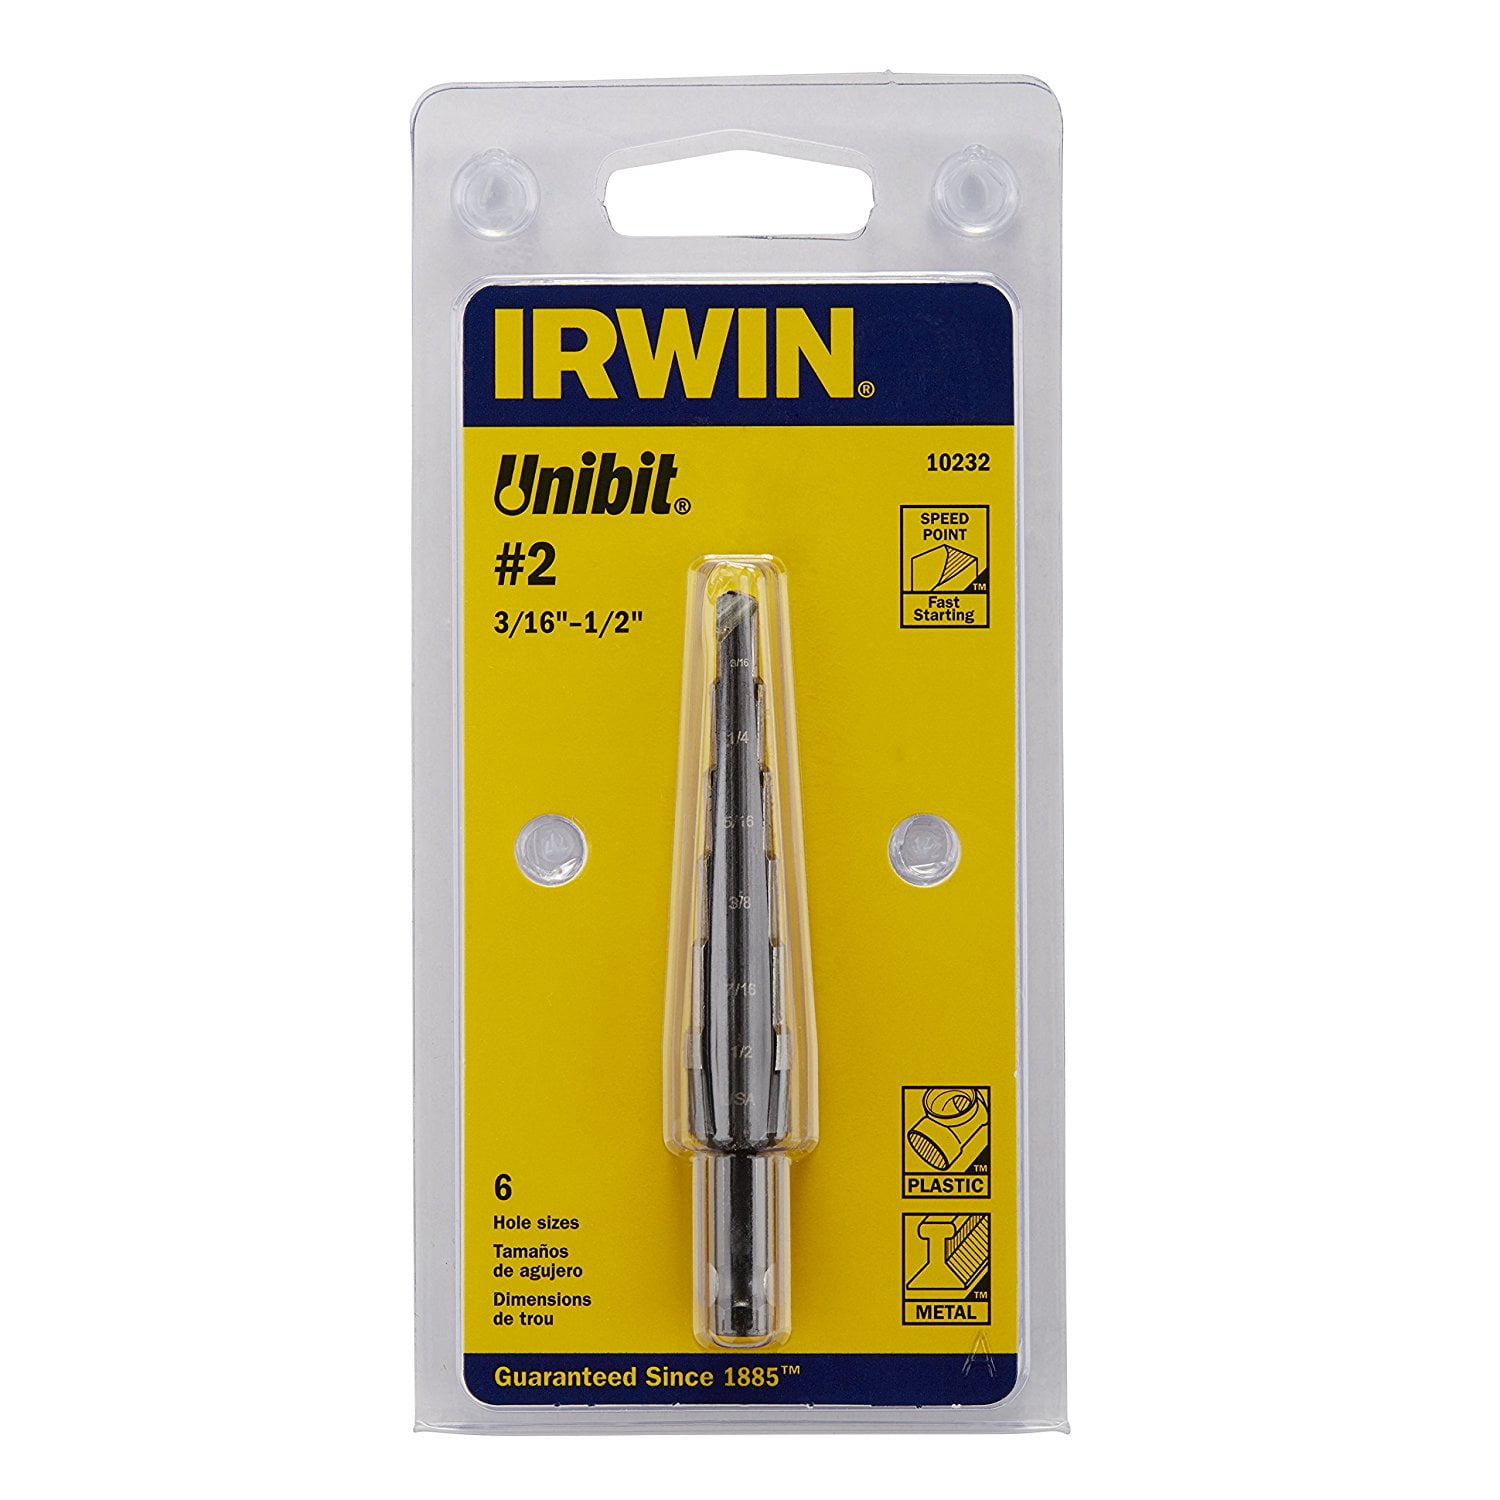 IRWIN Irwin Tools UniBit 3/16-Inch to 1/2-Inch Step-Drill Bit 1/4-Inch Shank 10232 